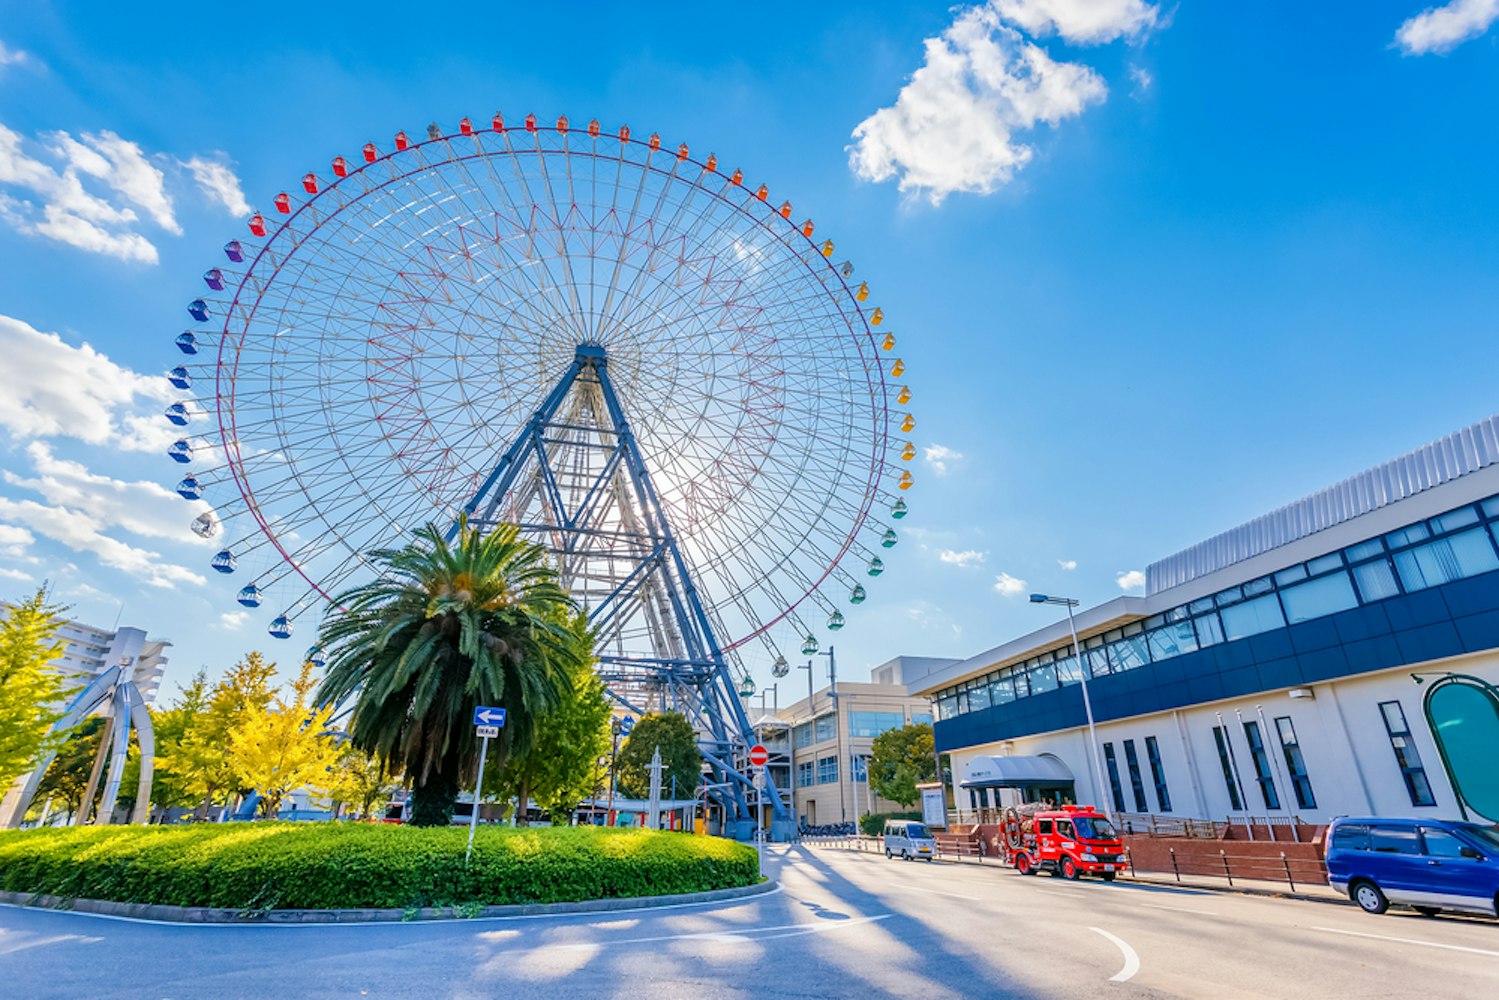 Tempozan Ferris Wheel in Osaka, Japan